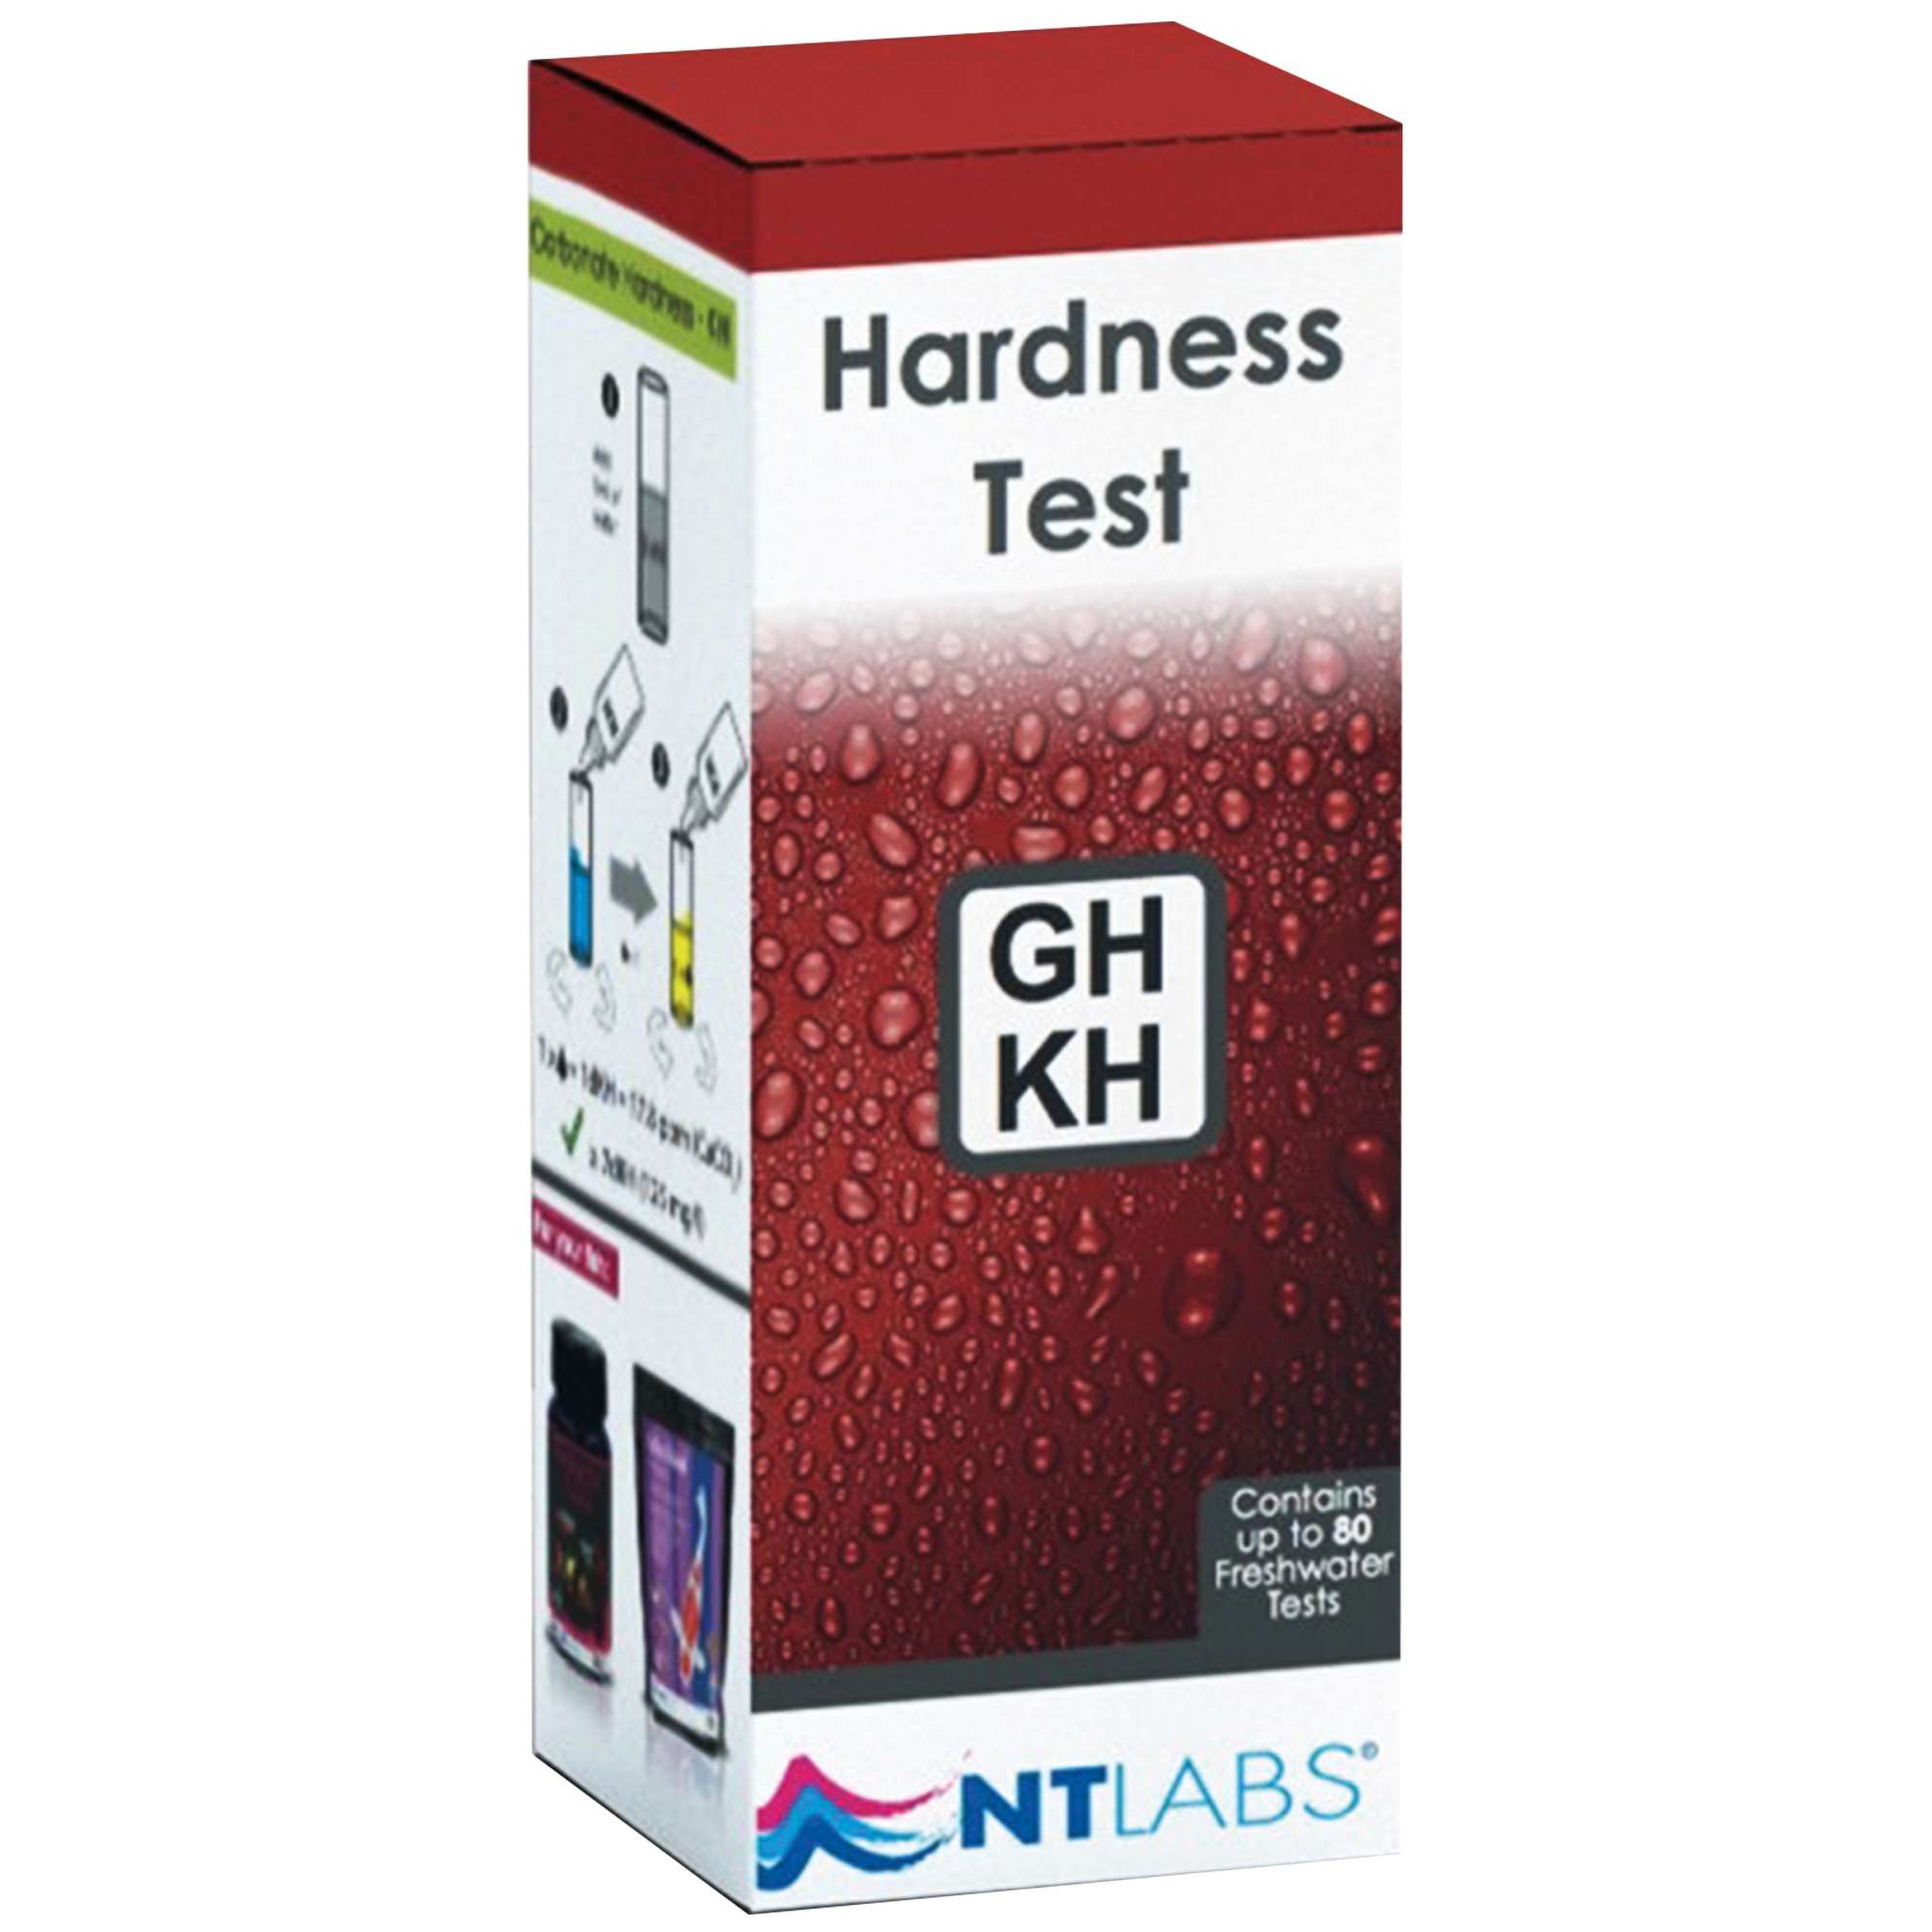 GH test kit (medidor dureza total GH en agua dulce).